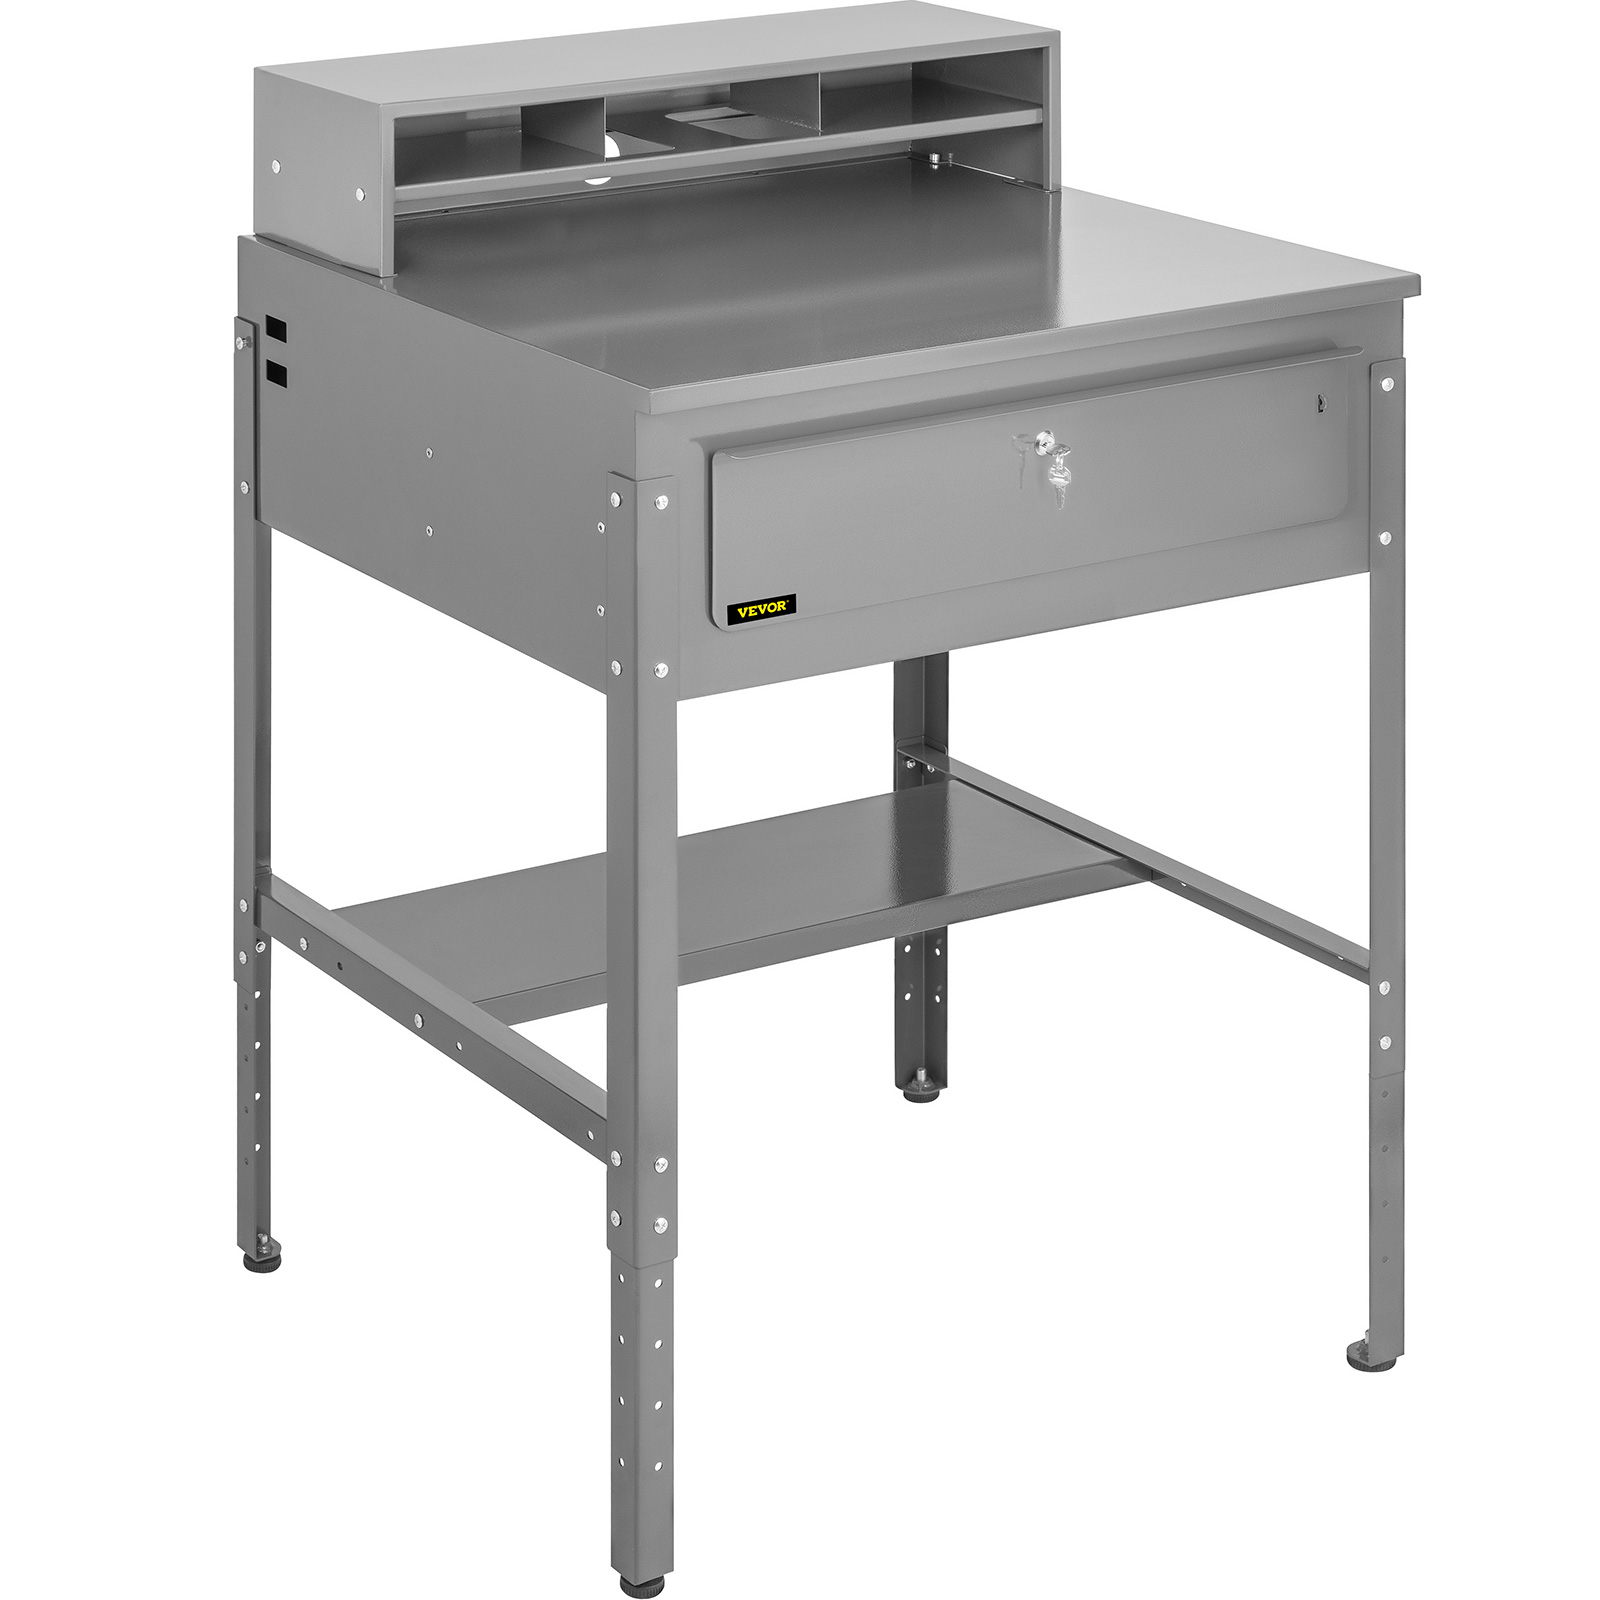 Vevor Flat Top Shop Desk W Pigeonhole Compartments 31.5"w X 26.8"d X 45.7"h Gray от Vevor Many GEOs